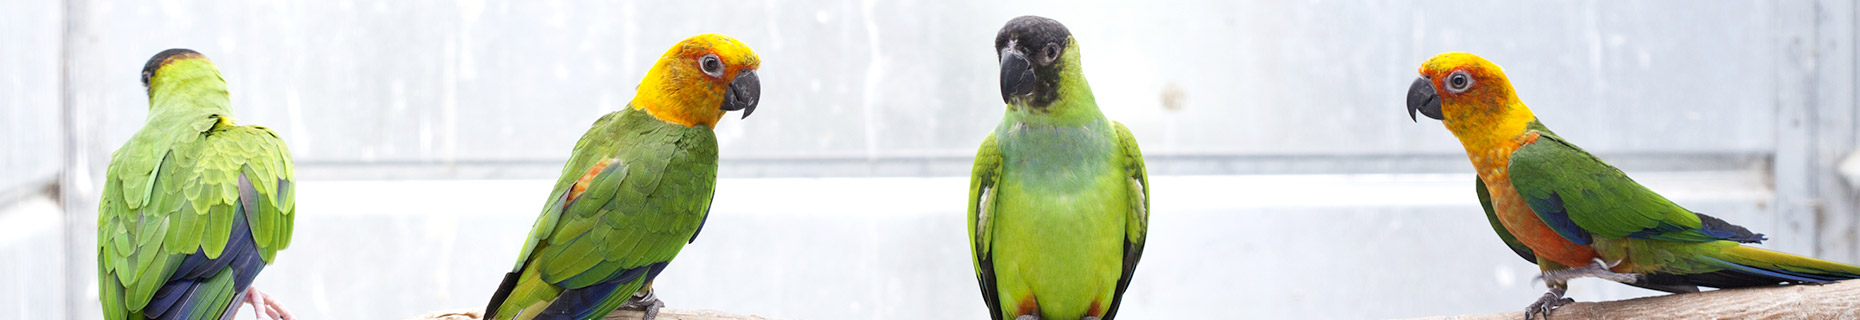 minizoorinaldi en elevage-germoglio-parrots-15kg-p1085587 005